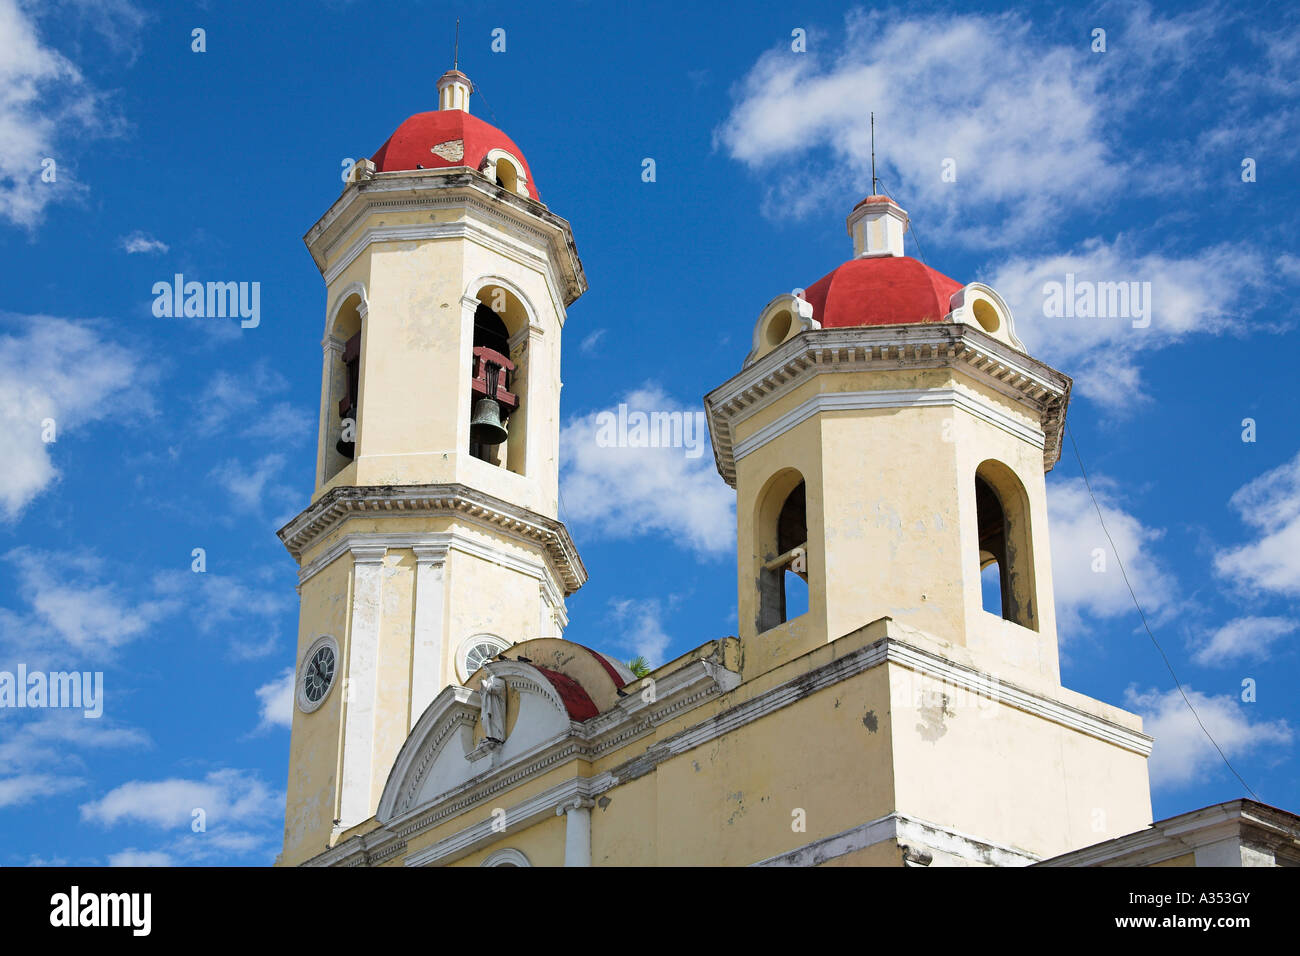 Catedral de la Purisima Concepcion, Our Lady of the Immaculate Conception, Parque Jose Marti, Plaza de Armas, Cienfuegos, Cuba Stock Photo